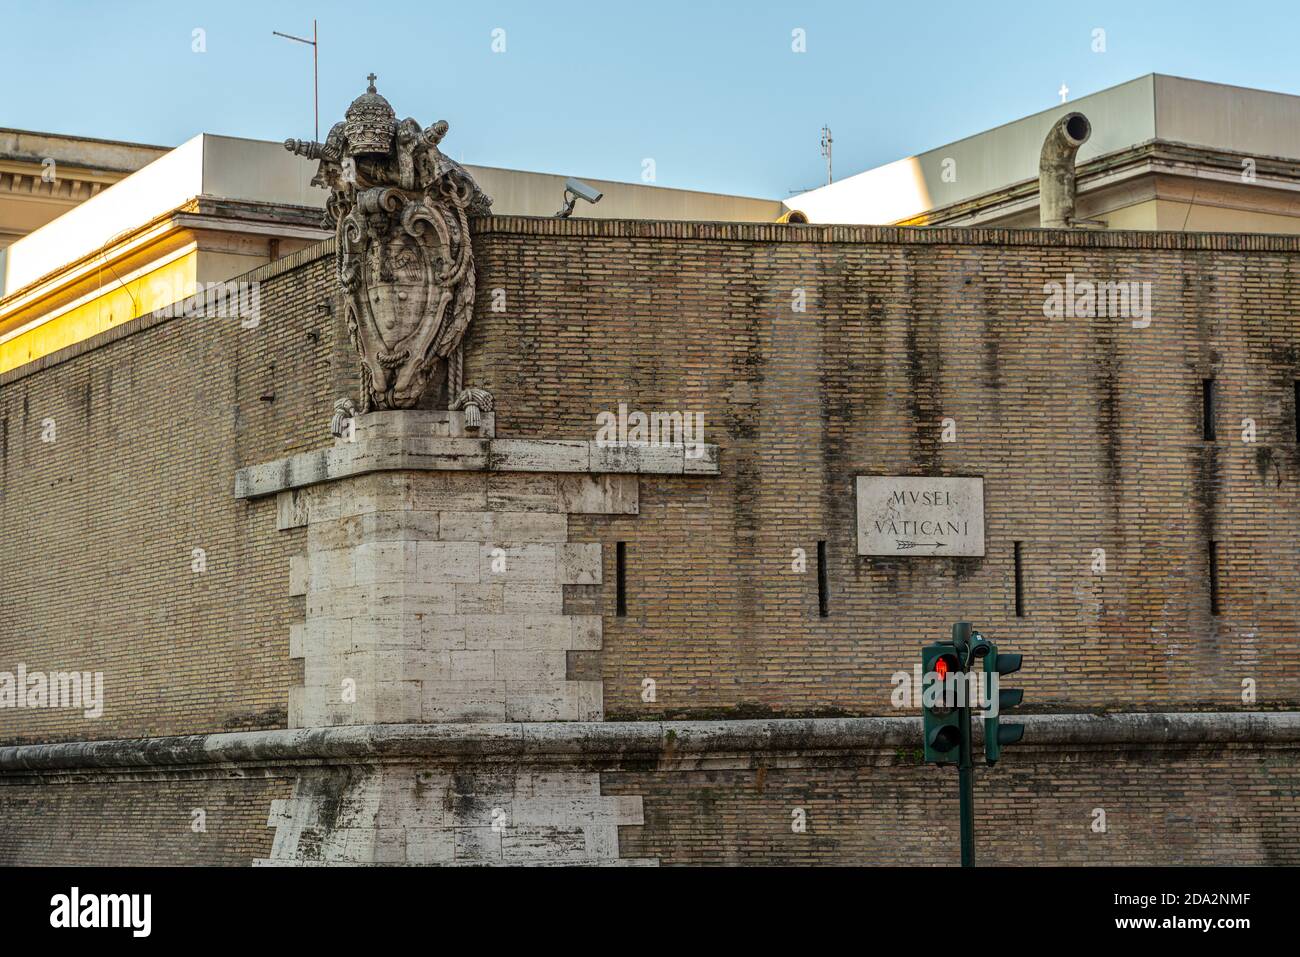 Die Mauern des Vatikans, die den Staat der Vatikanstadt umgeben. Vatikanstadt, Rom, Latium, Italien, Europa Stockfoto